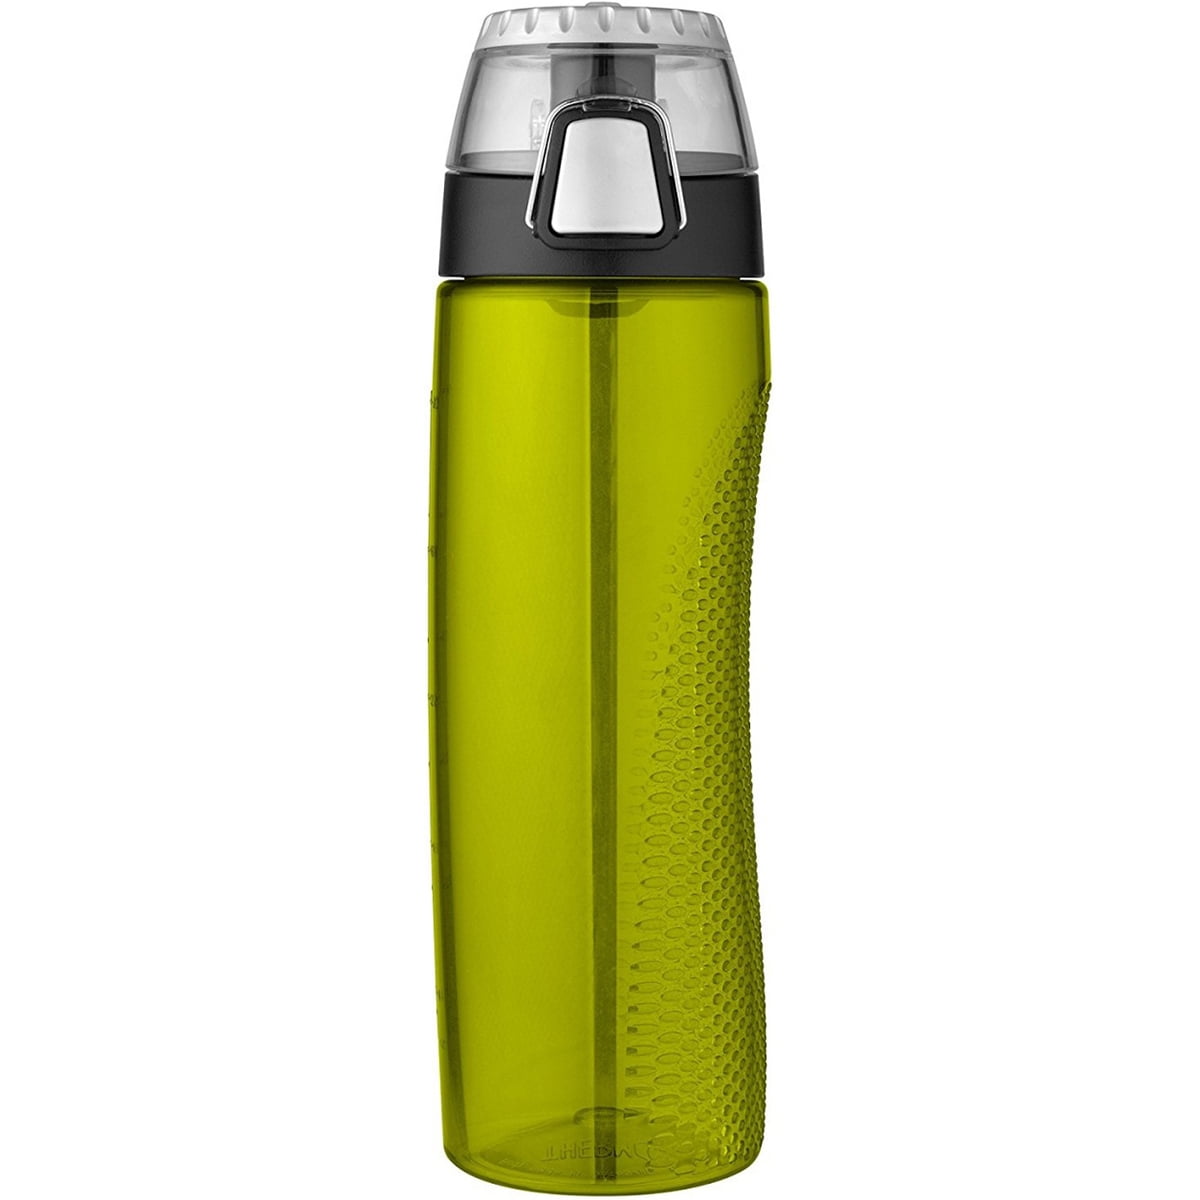 Nantucket stainless steel water bottle - 24 oz.